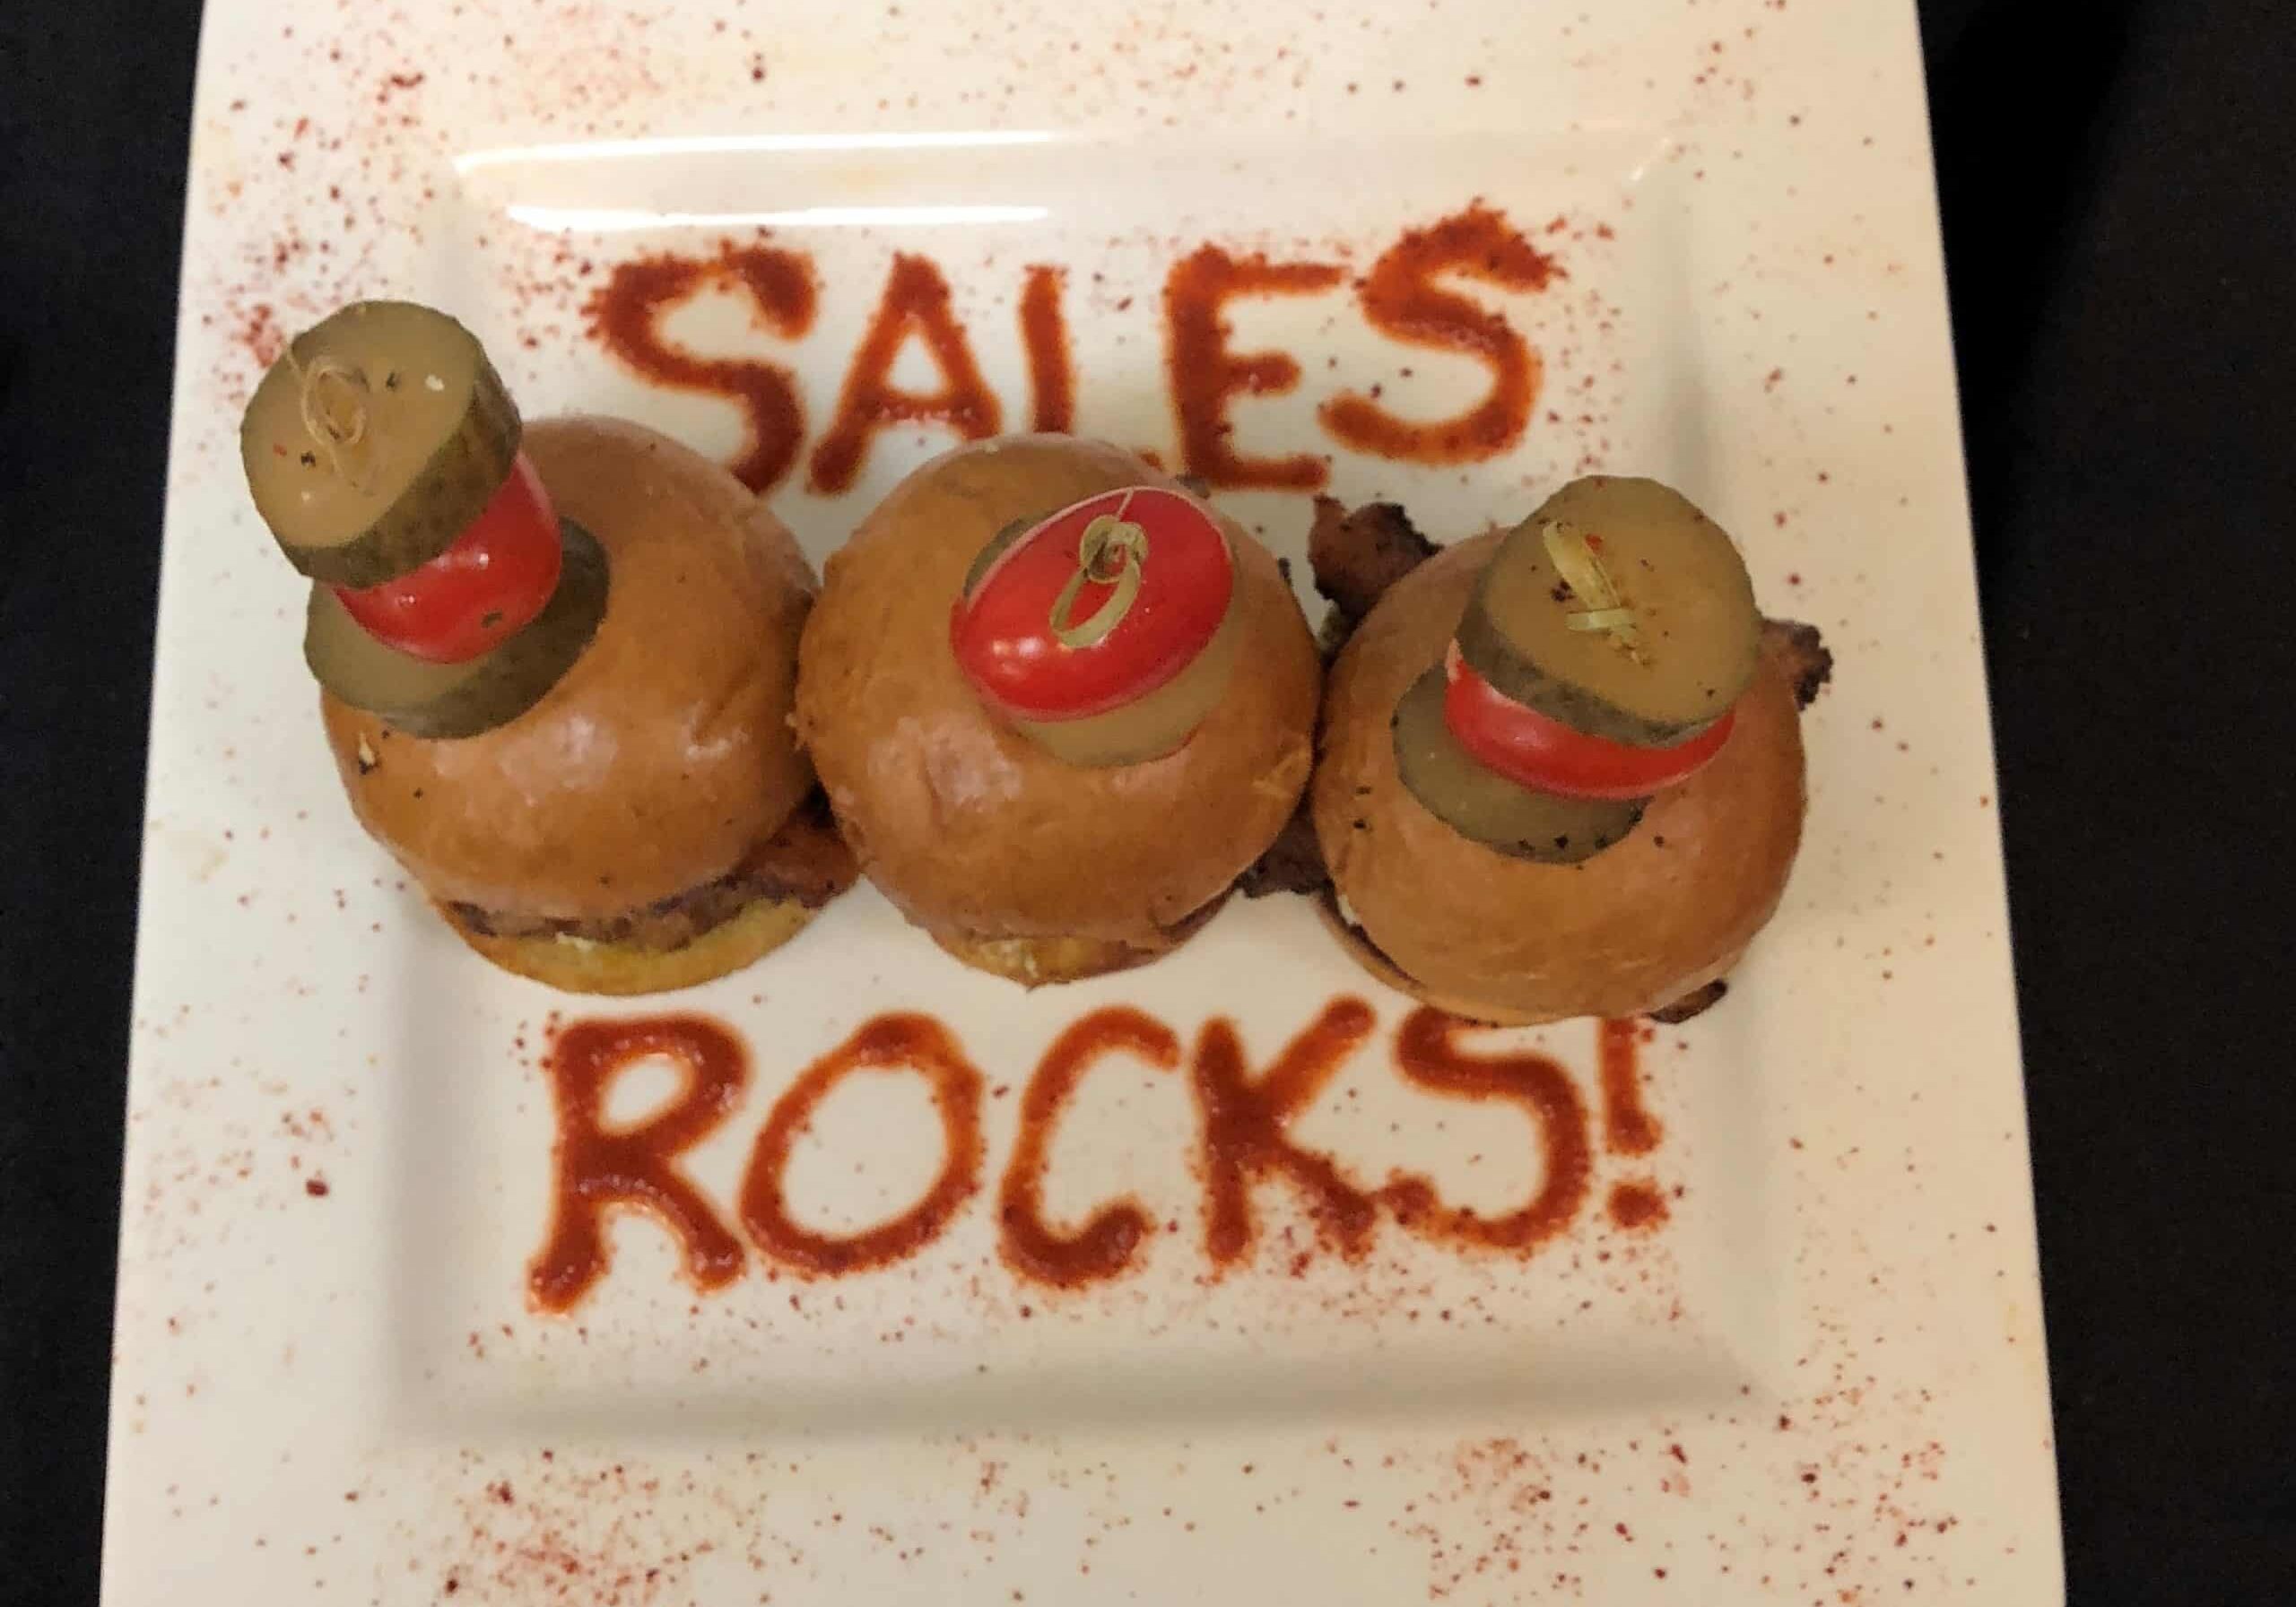 Sales Rocks! | Corporate Team Building Activities| Team Building With Taste